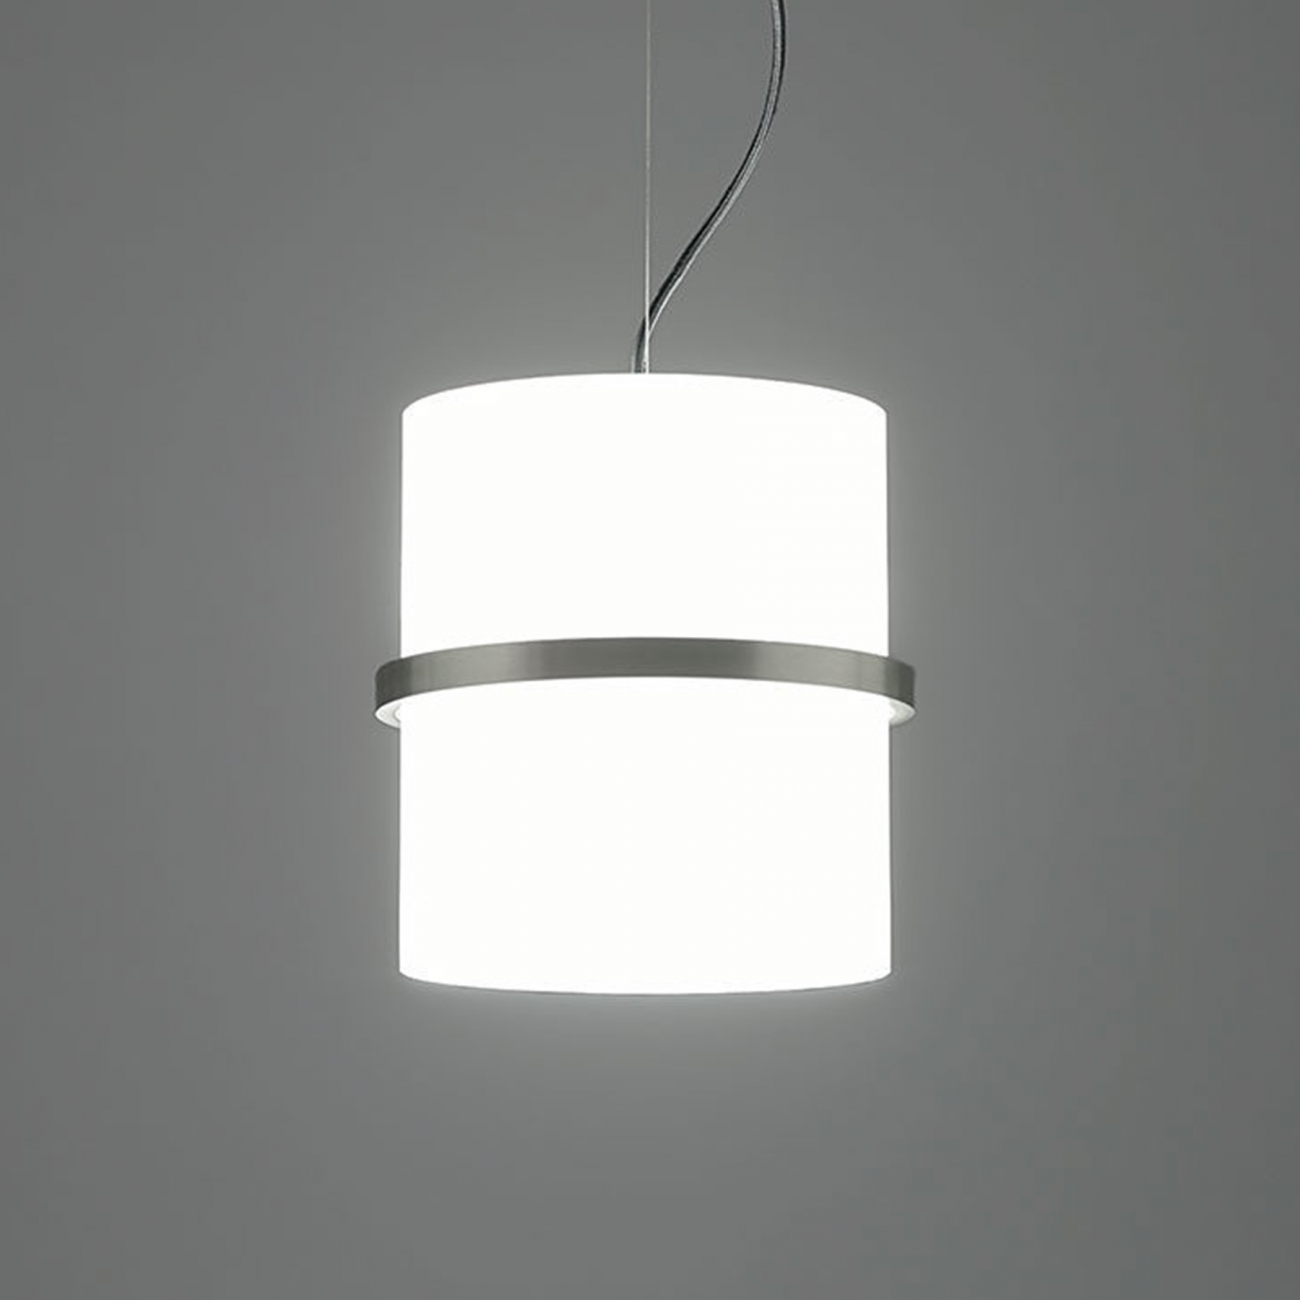 Firmamento Milano Boa Pendant Lamp